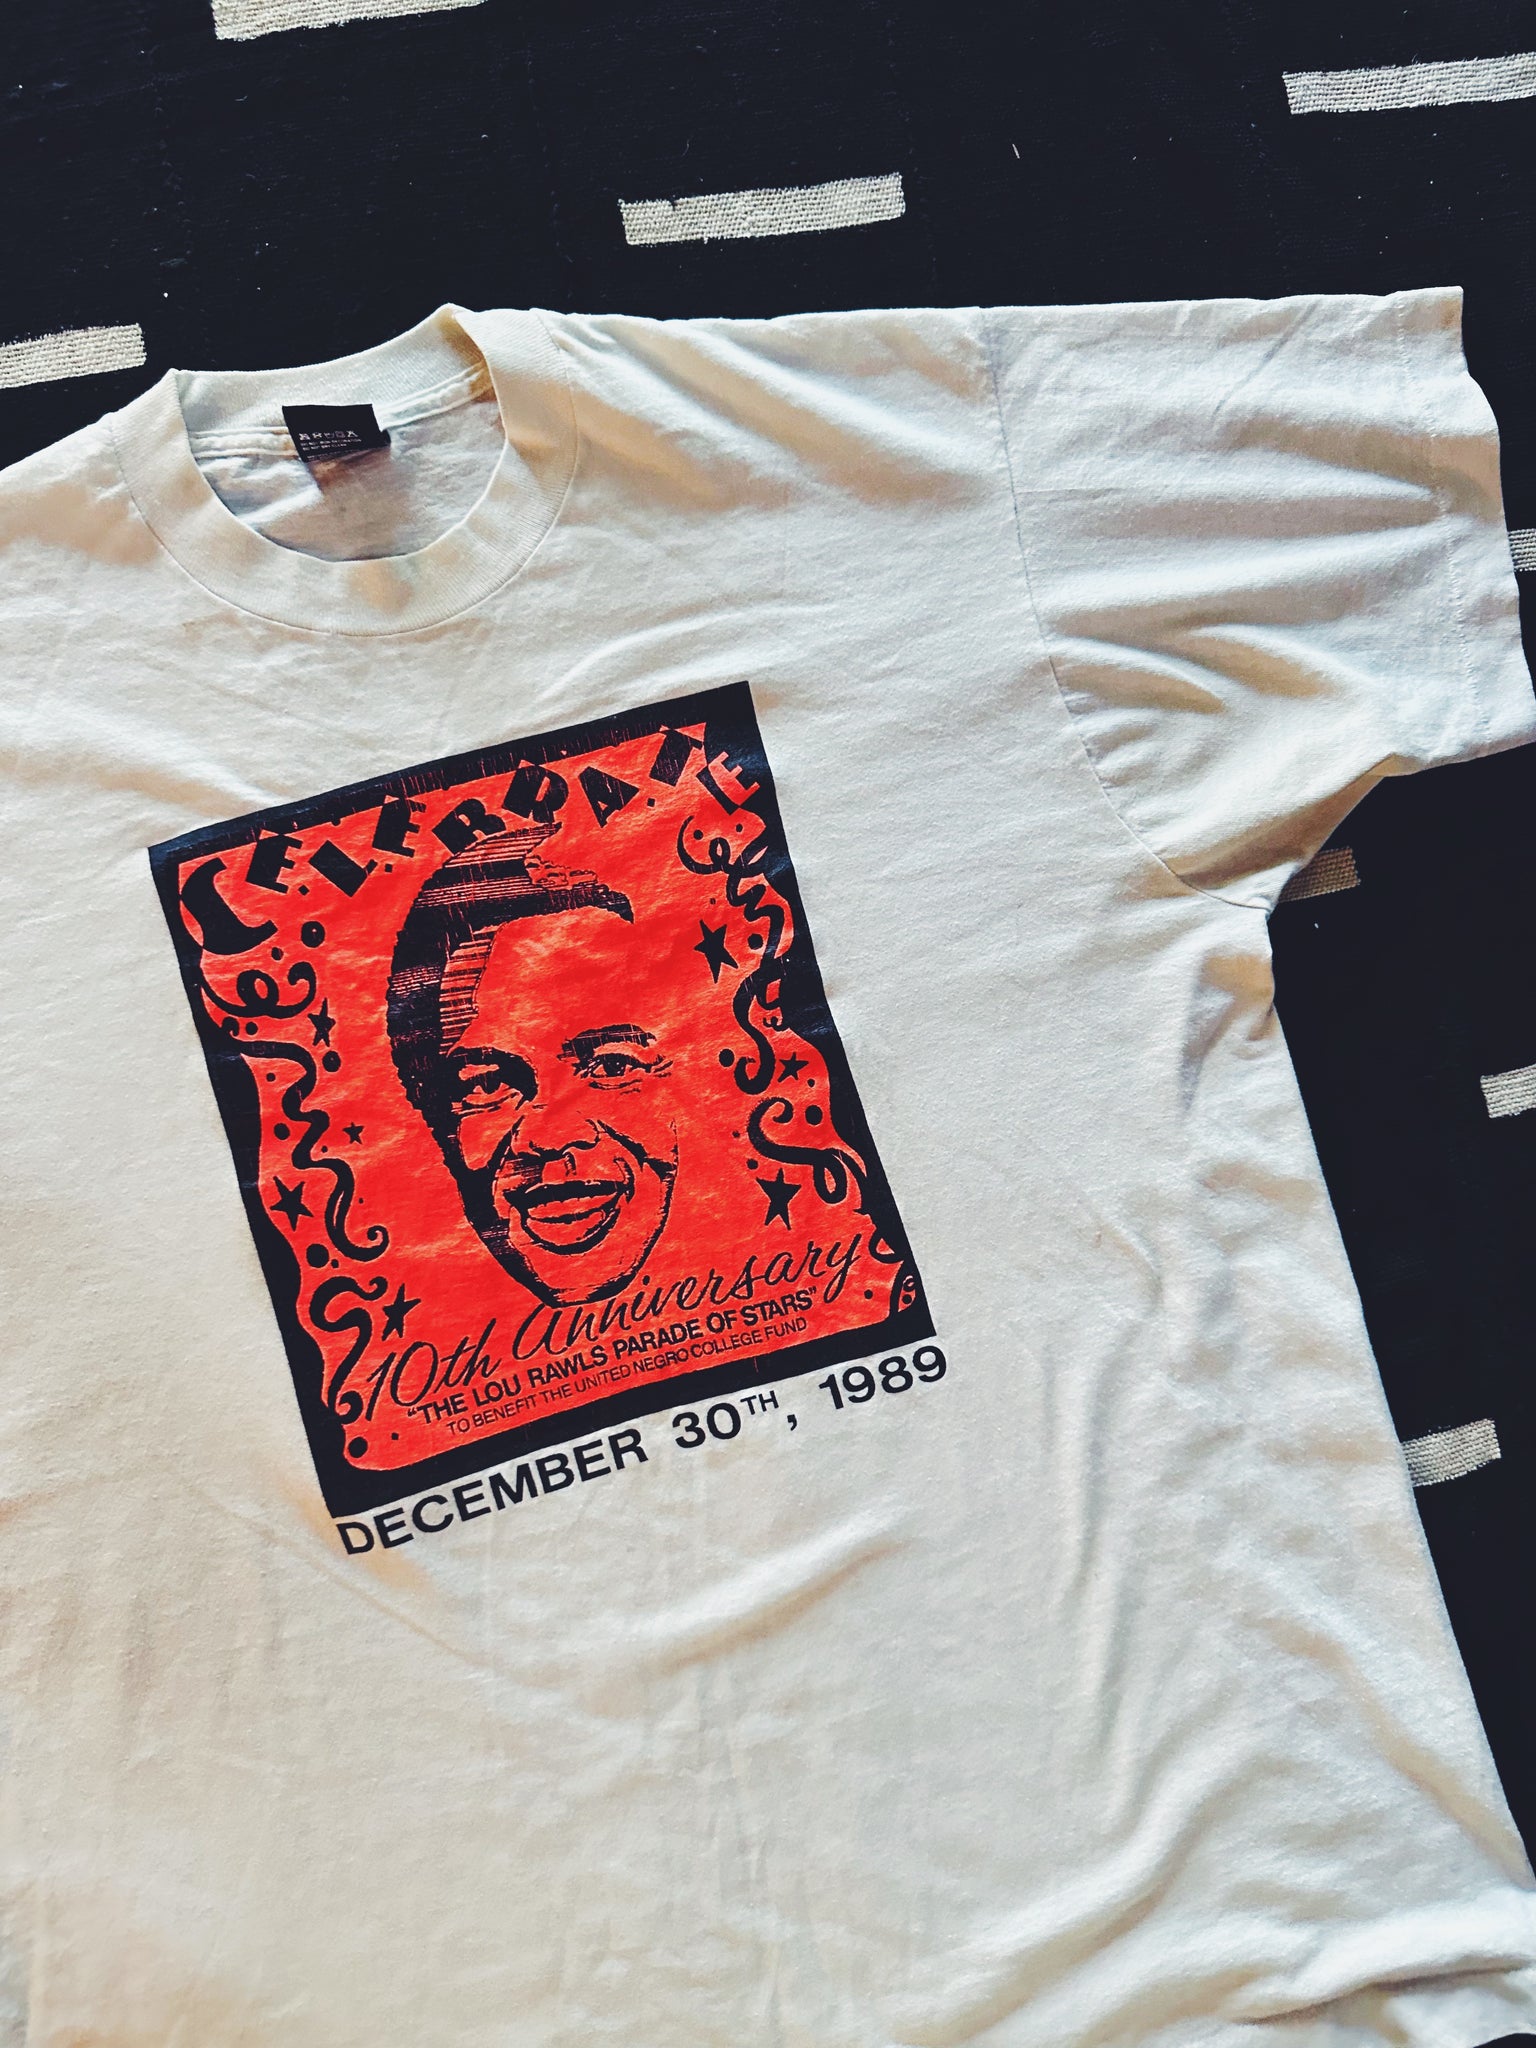 Vintage “Lou Rawls Parade of Stars” T-Shirt (1989)